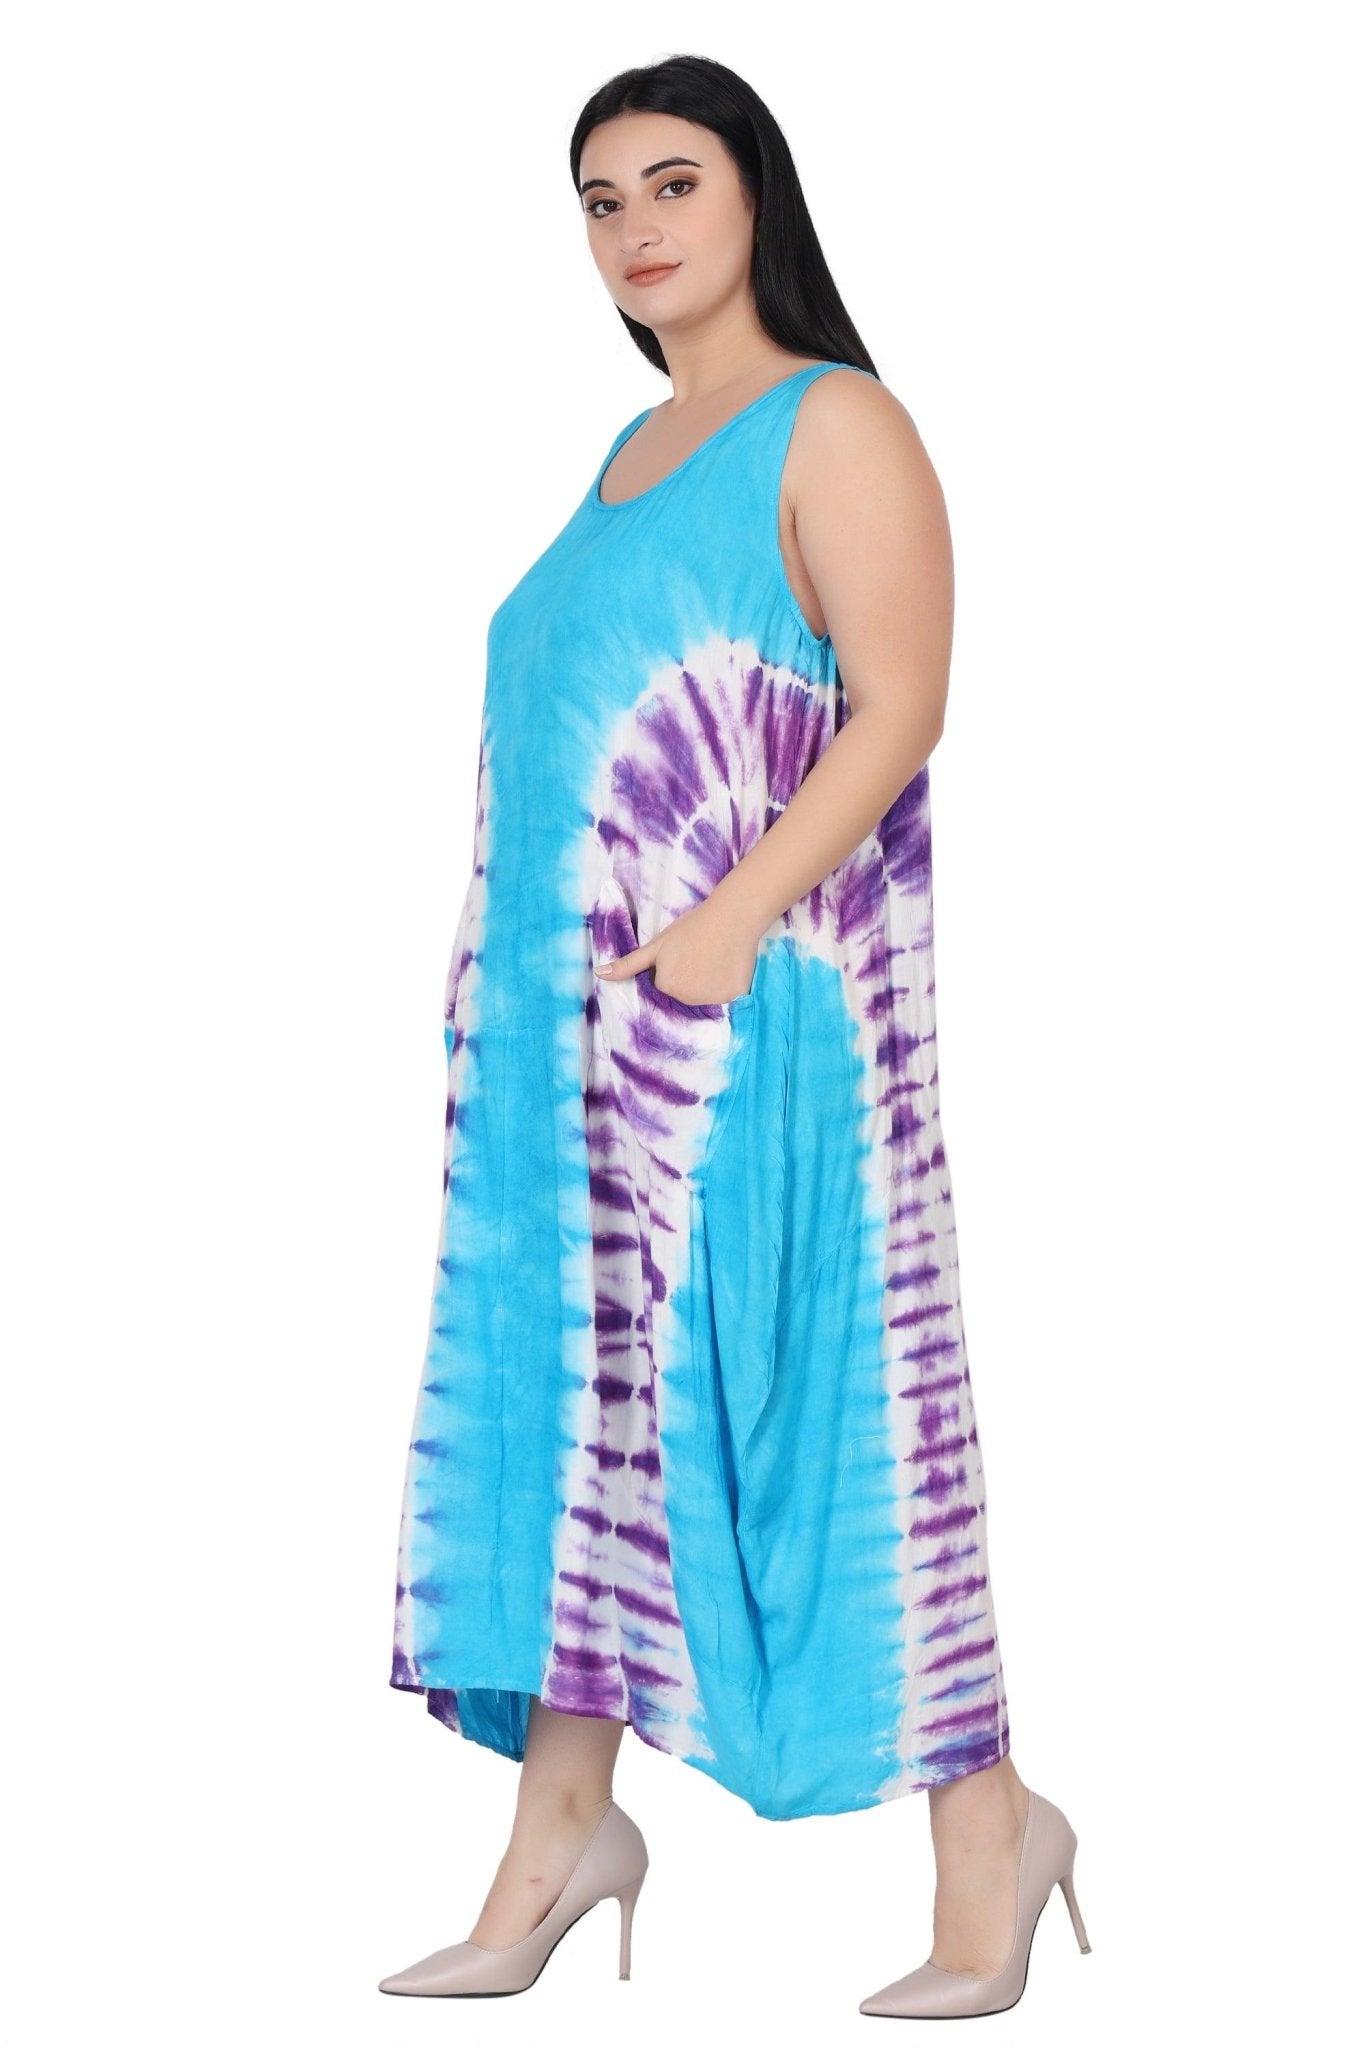 Ankle Length Tie Dye Dress w/ Pockets 522123 - Advance Apparels Inc